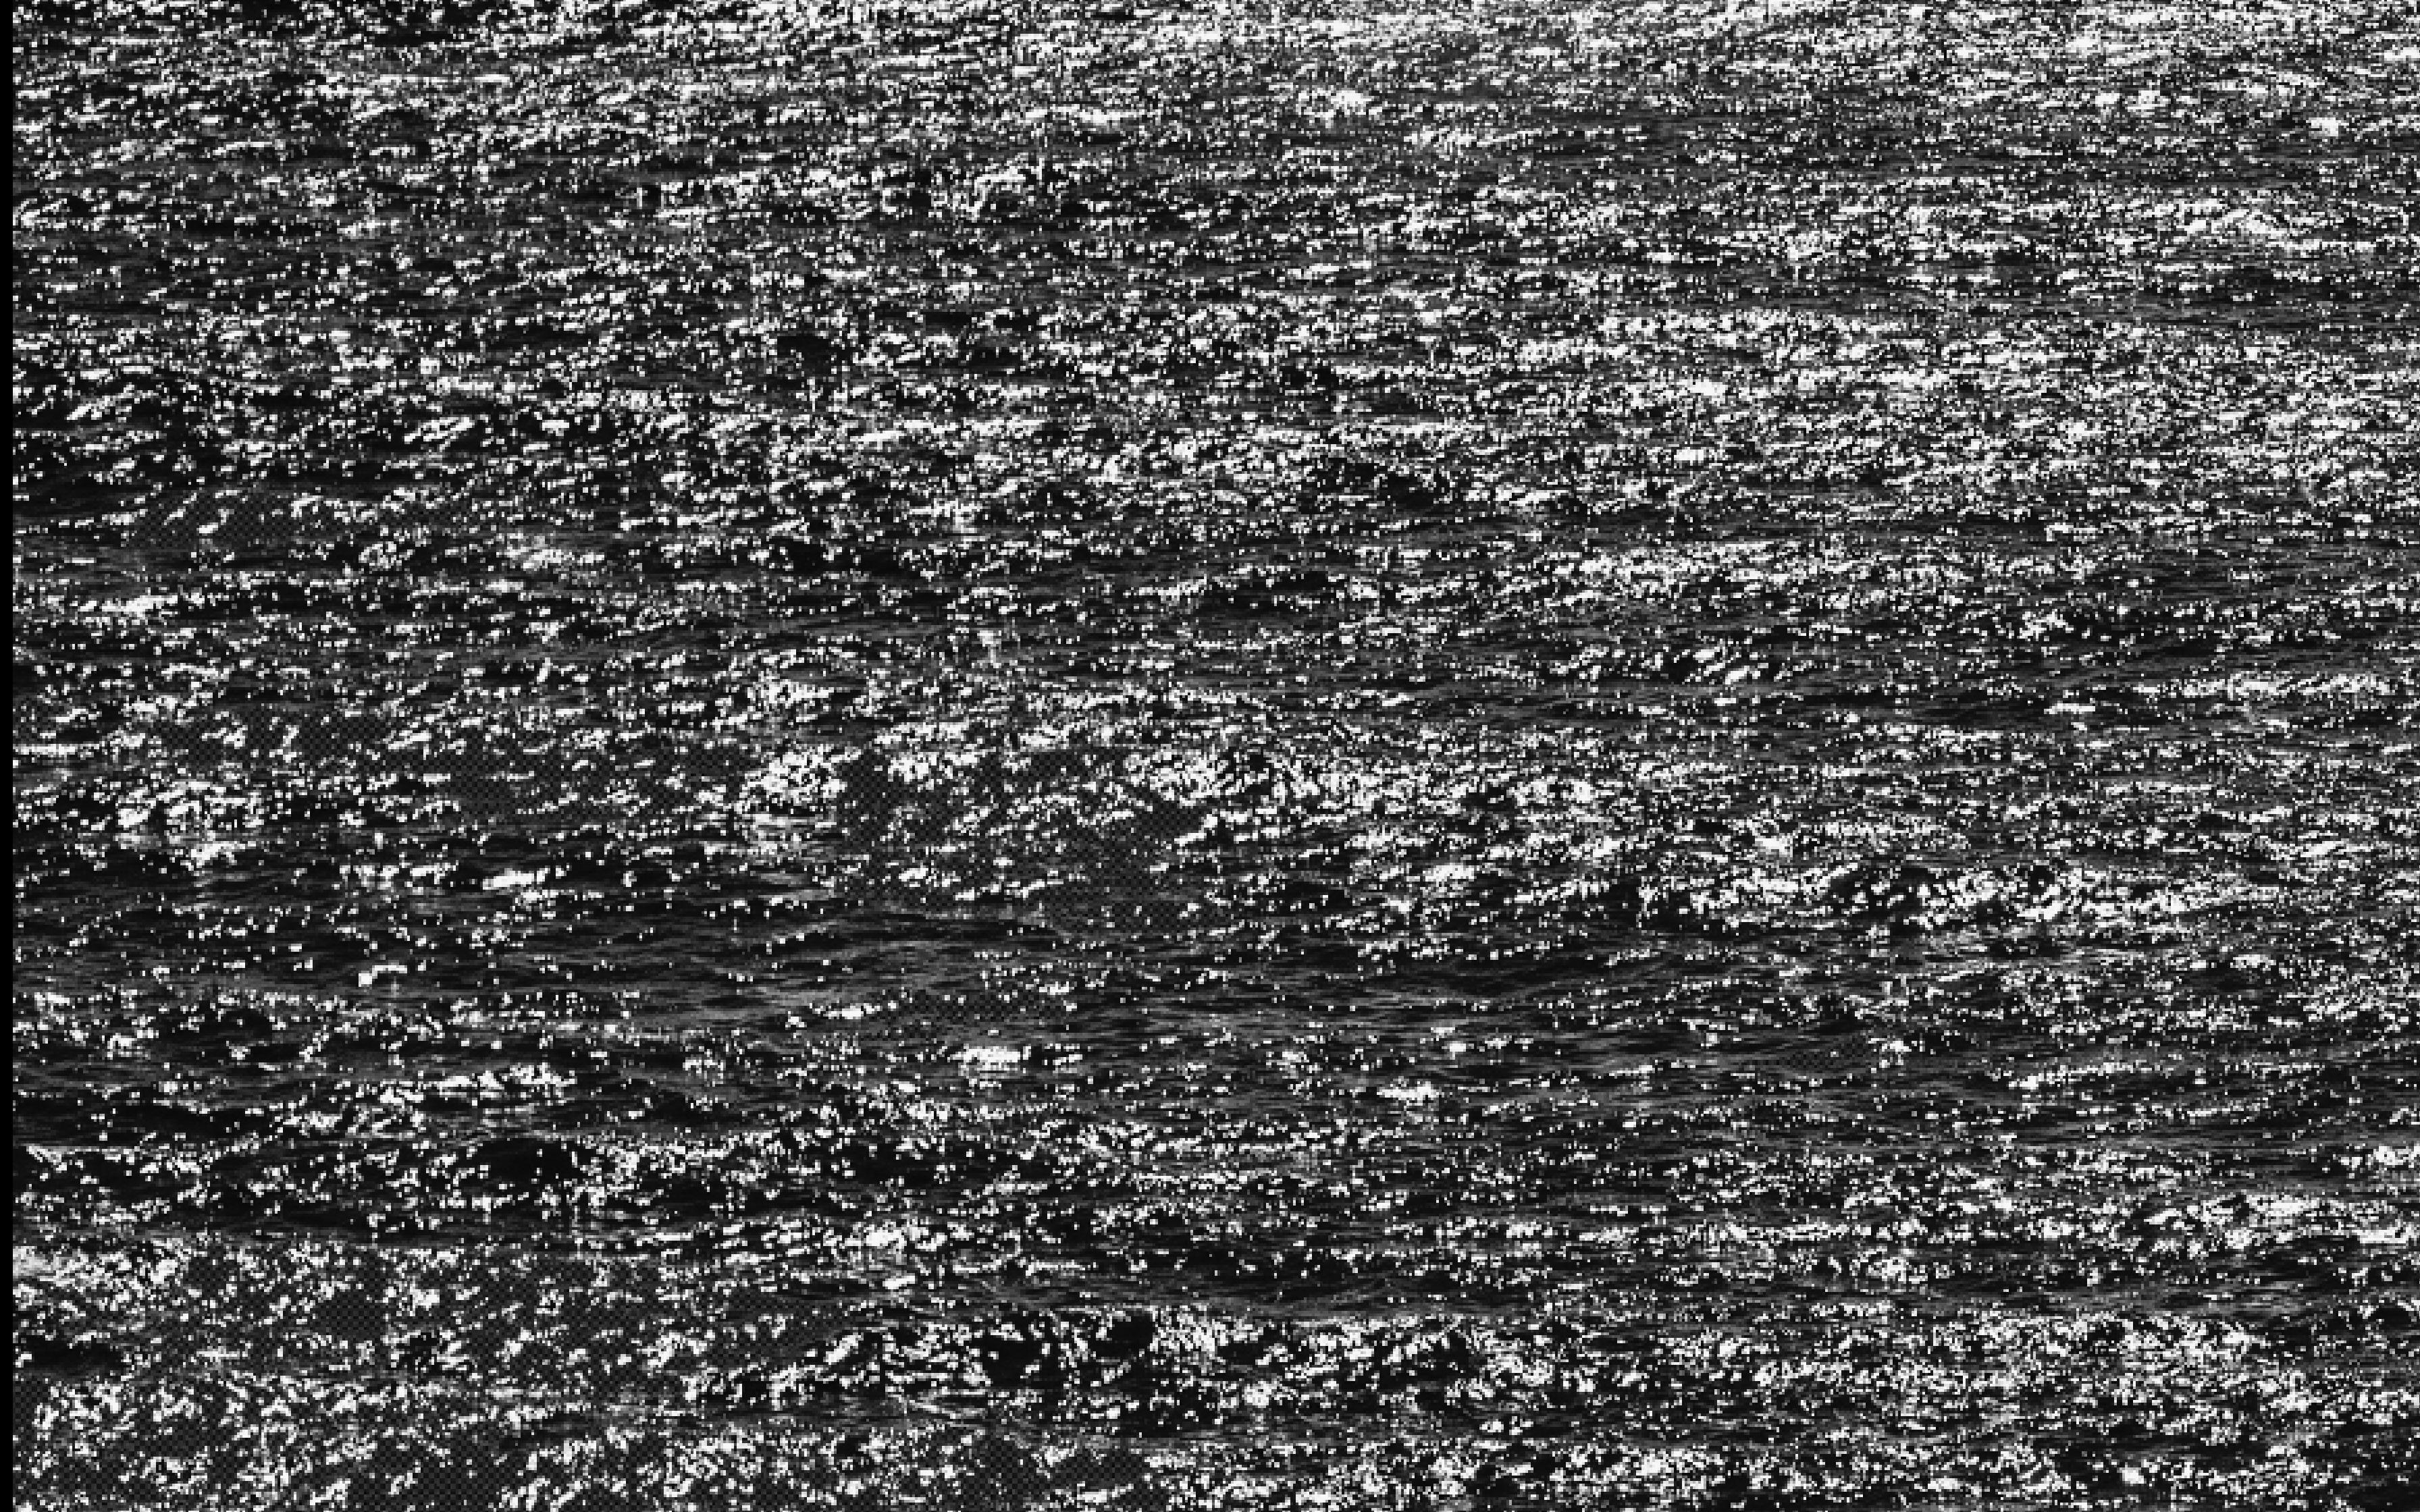 Water Monolith, Big Sur, CA - Black Landscape Photograph by Iliana Ortega